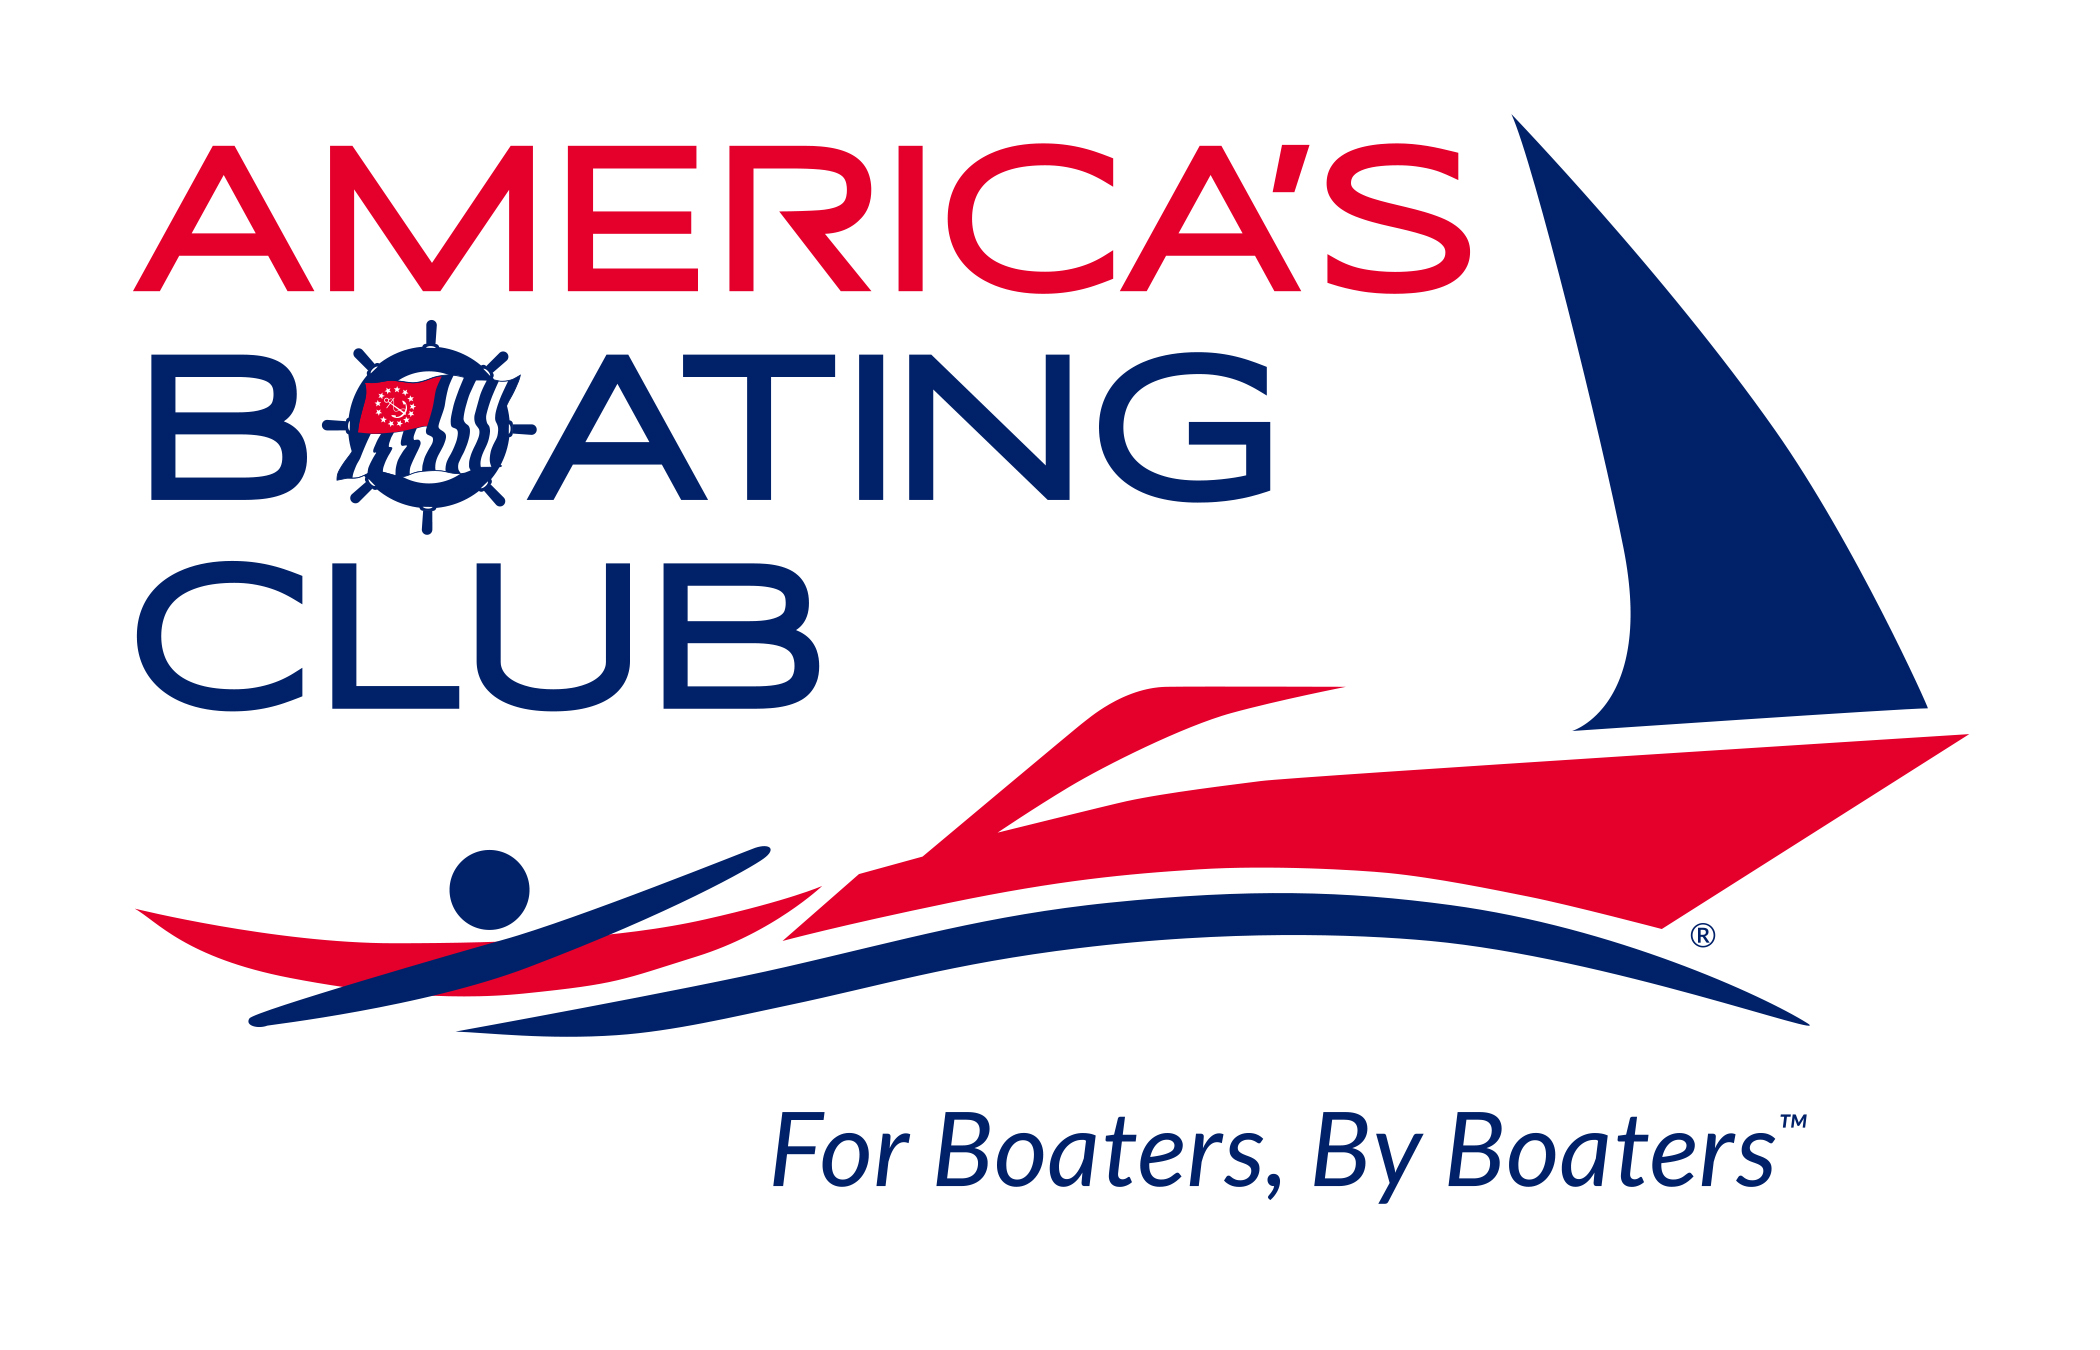 America's Boating Club logo